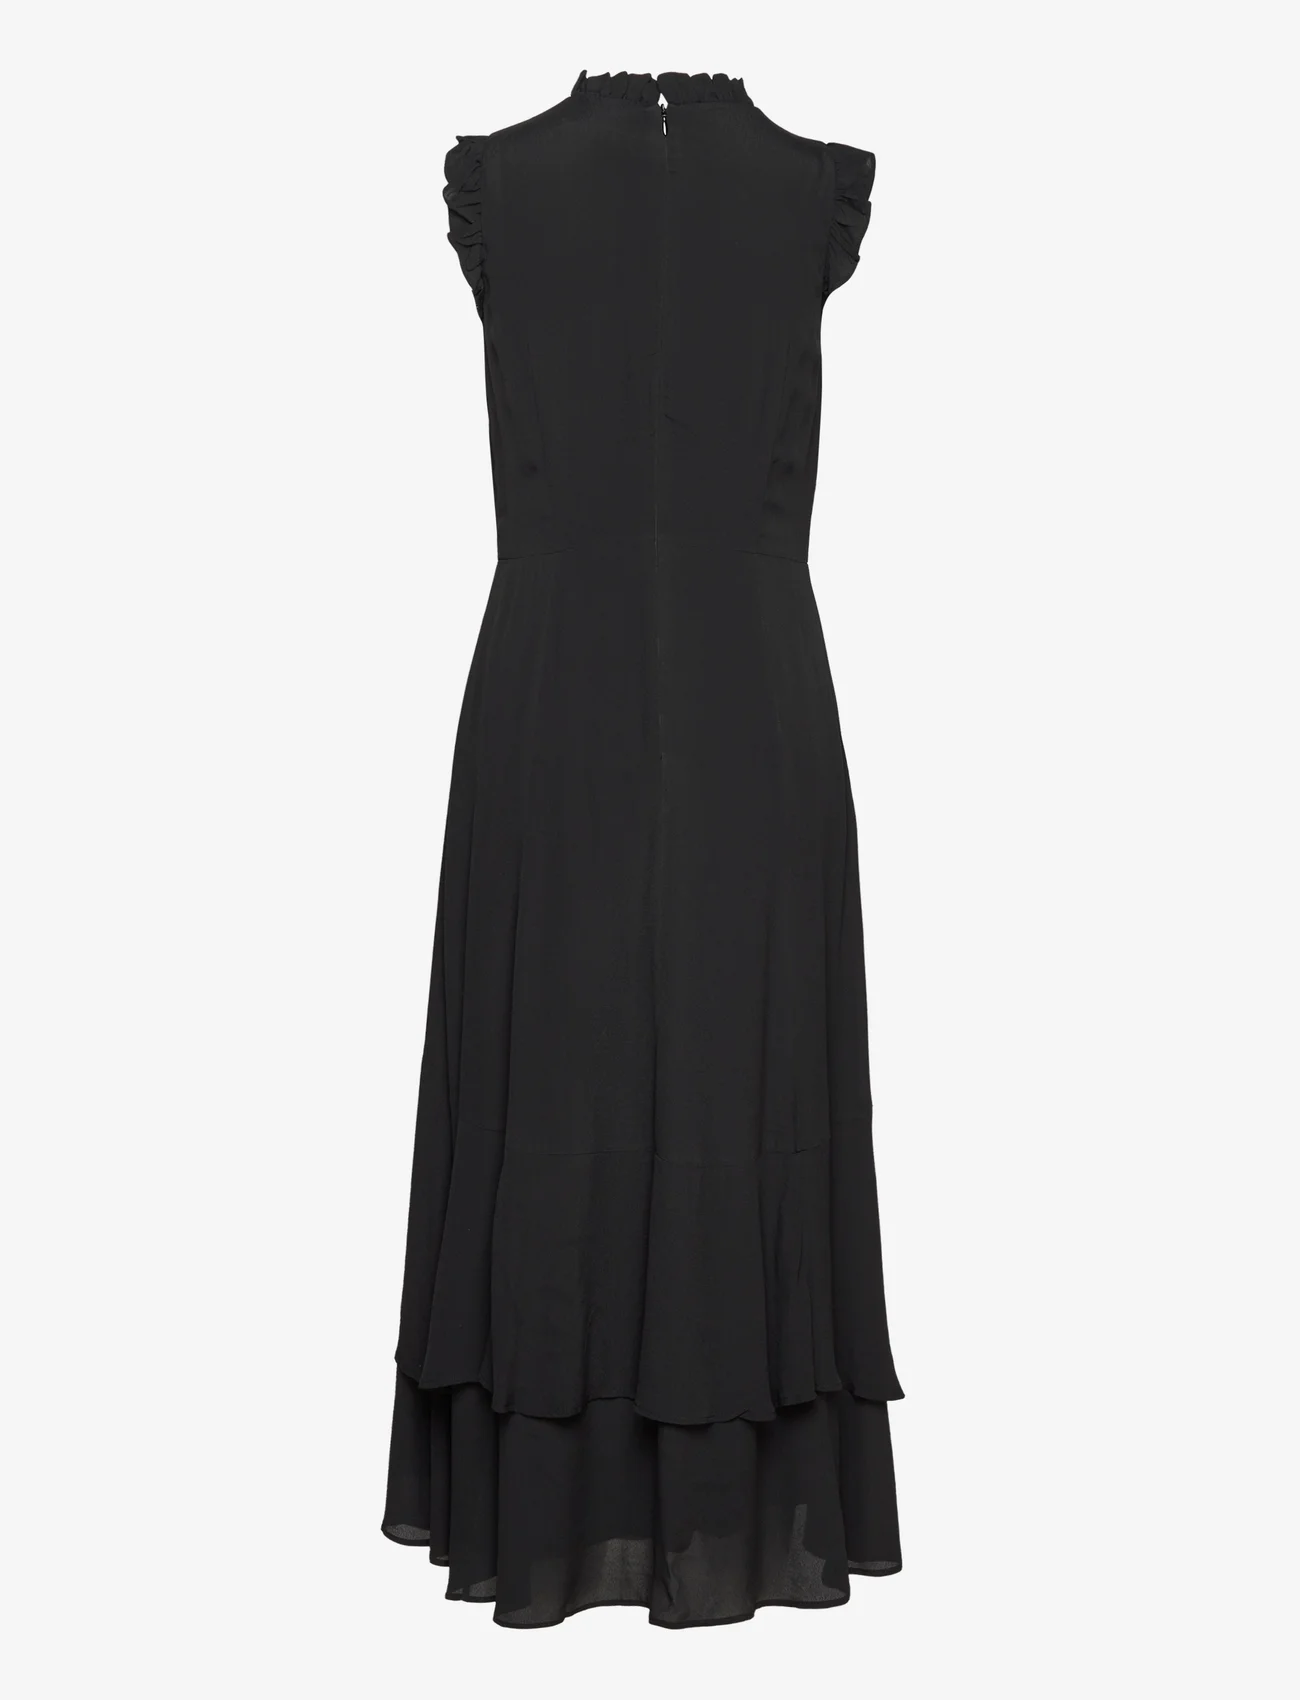 IVY OAK - Midi Length Ruffle  Dress - midi dresses - black - 1